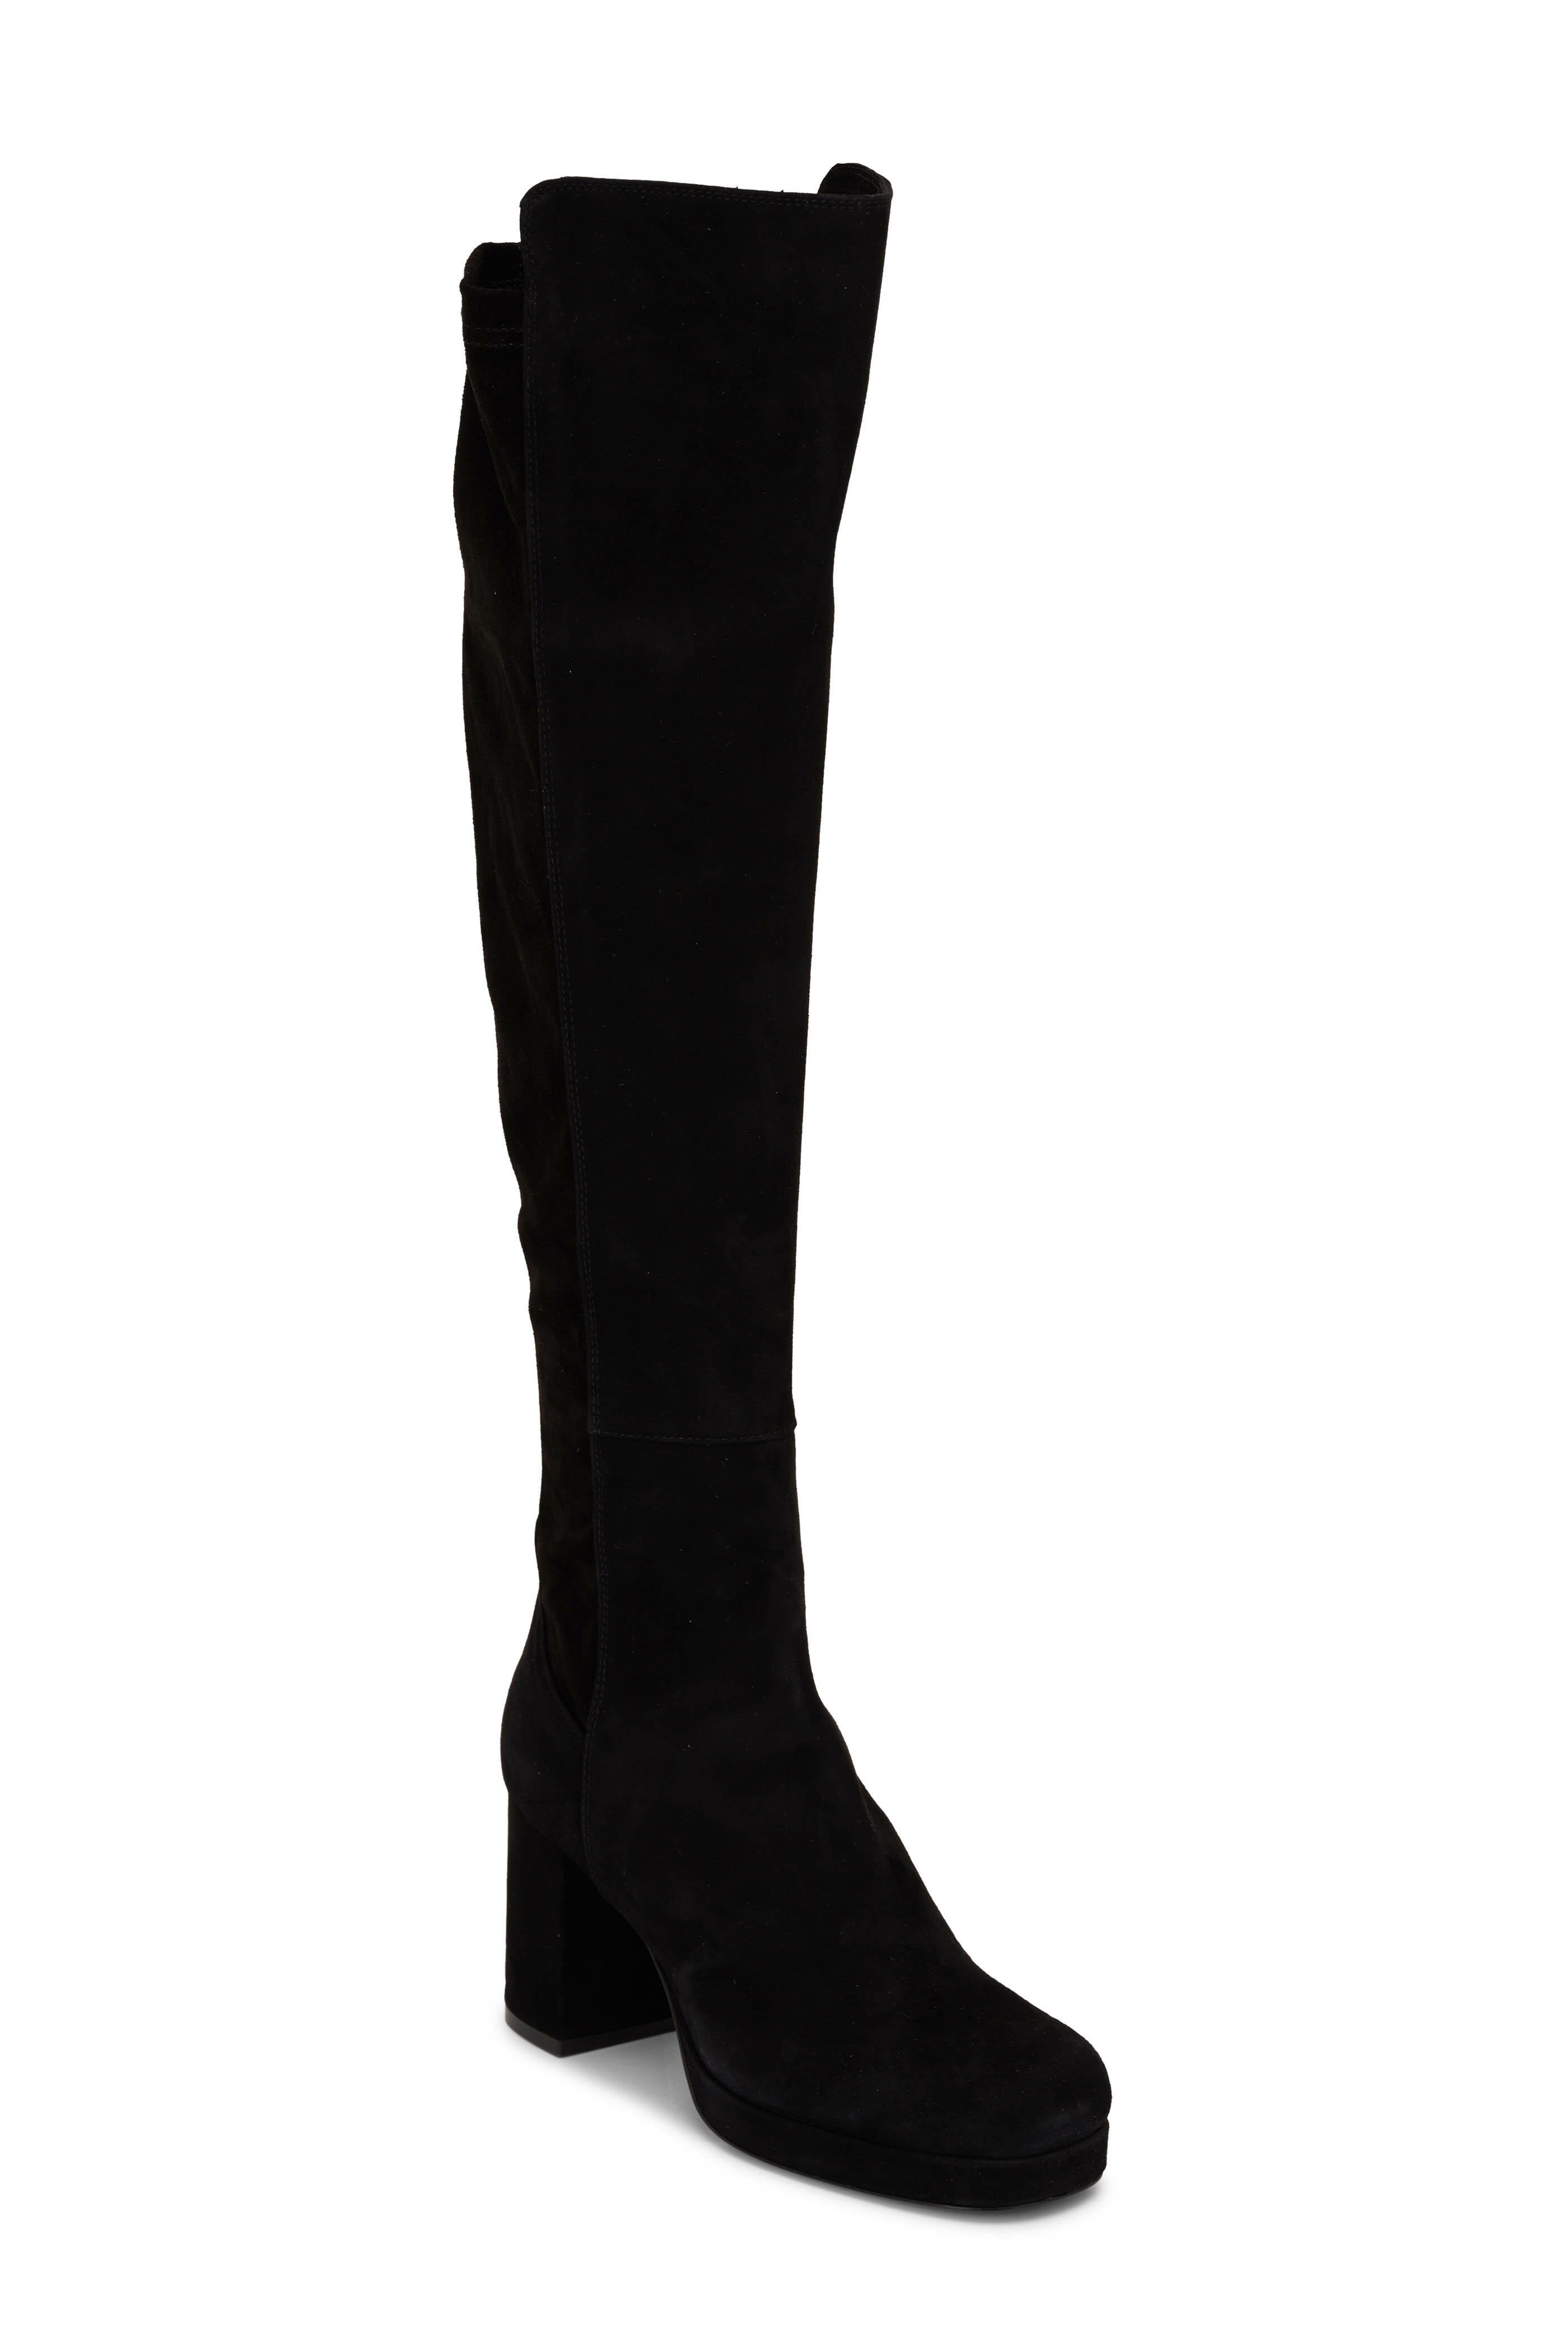 AGL - Betty Black Velour Over-The-Knee Boot, 80mm